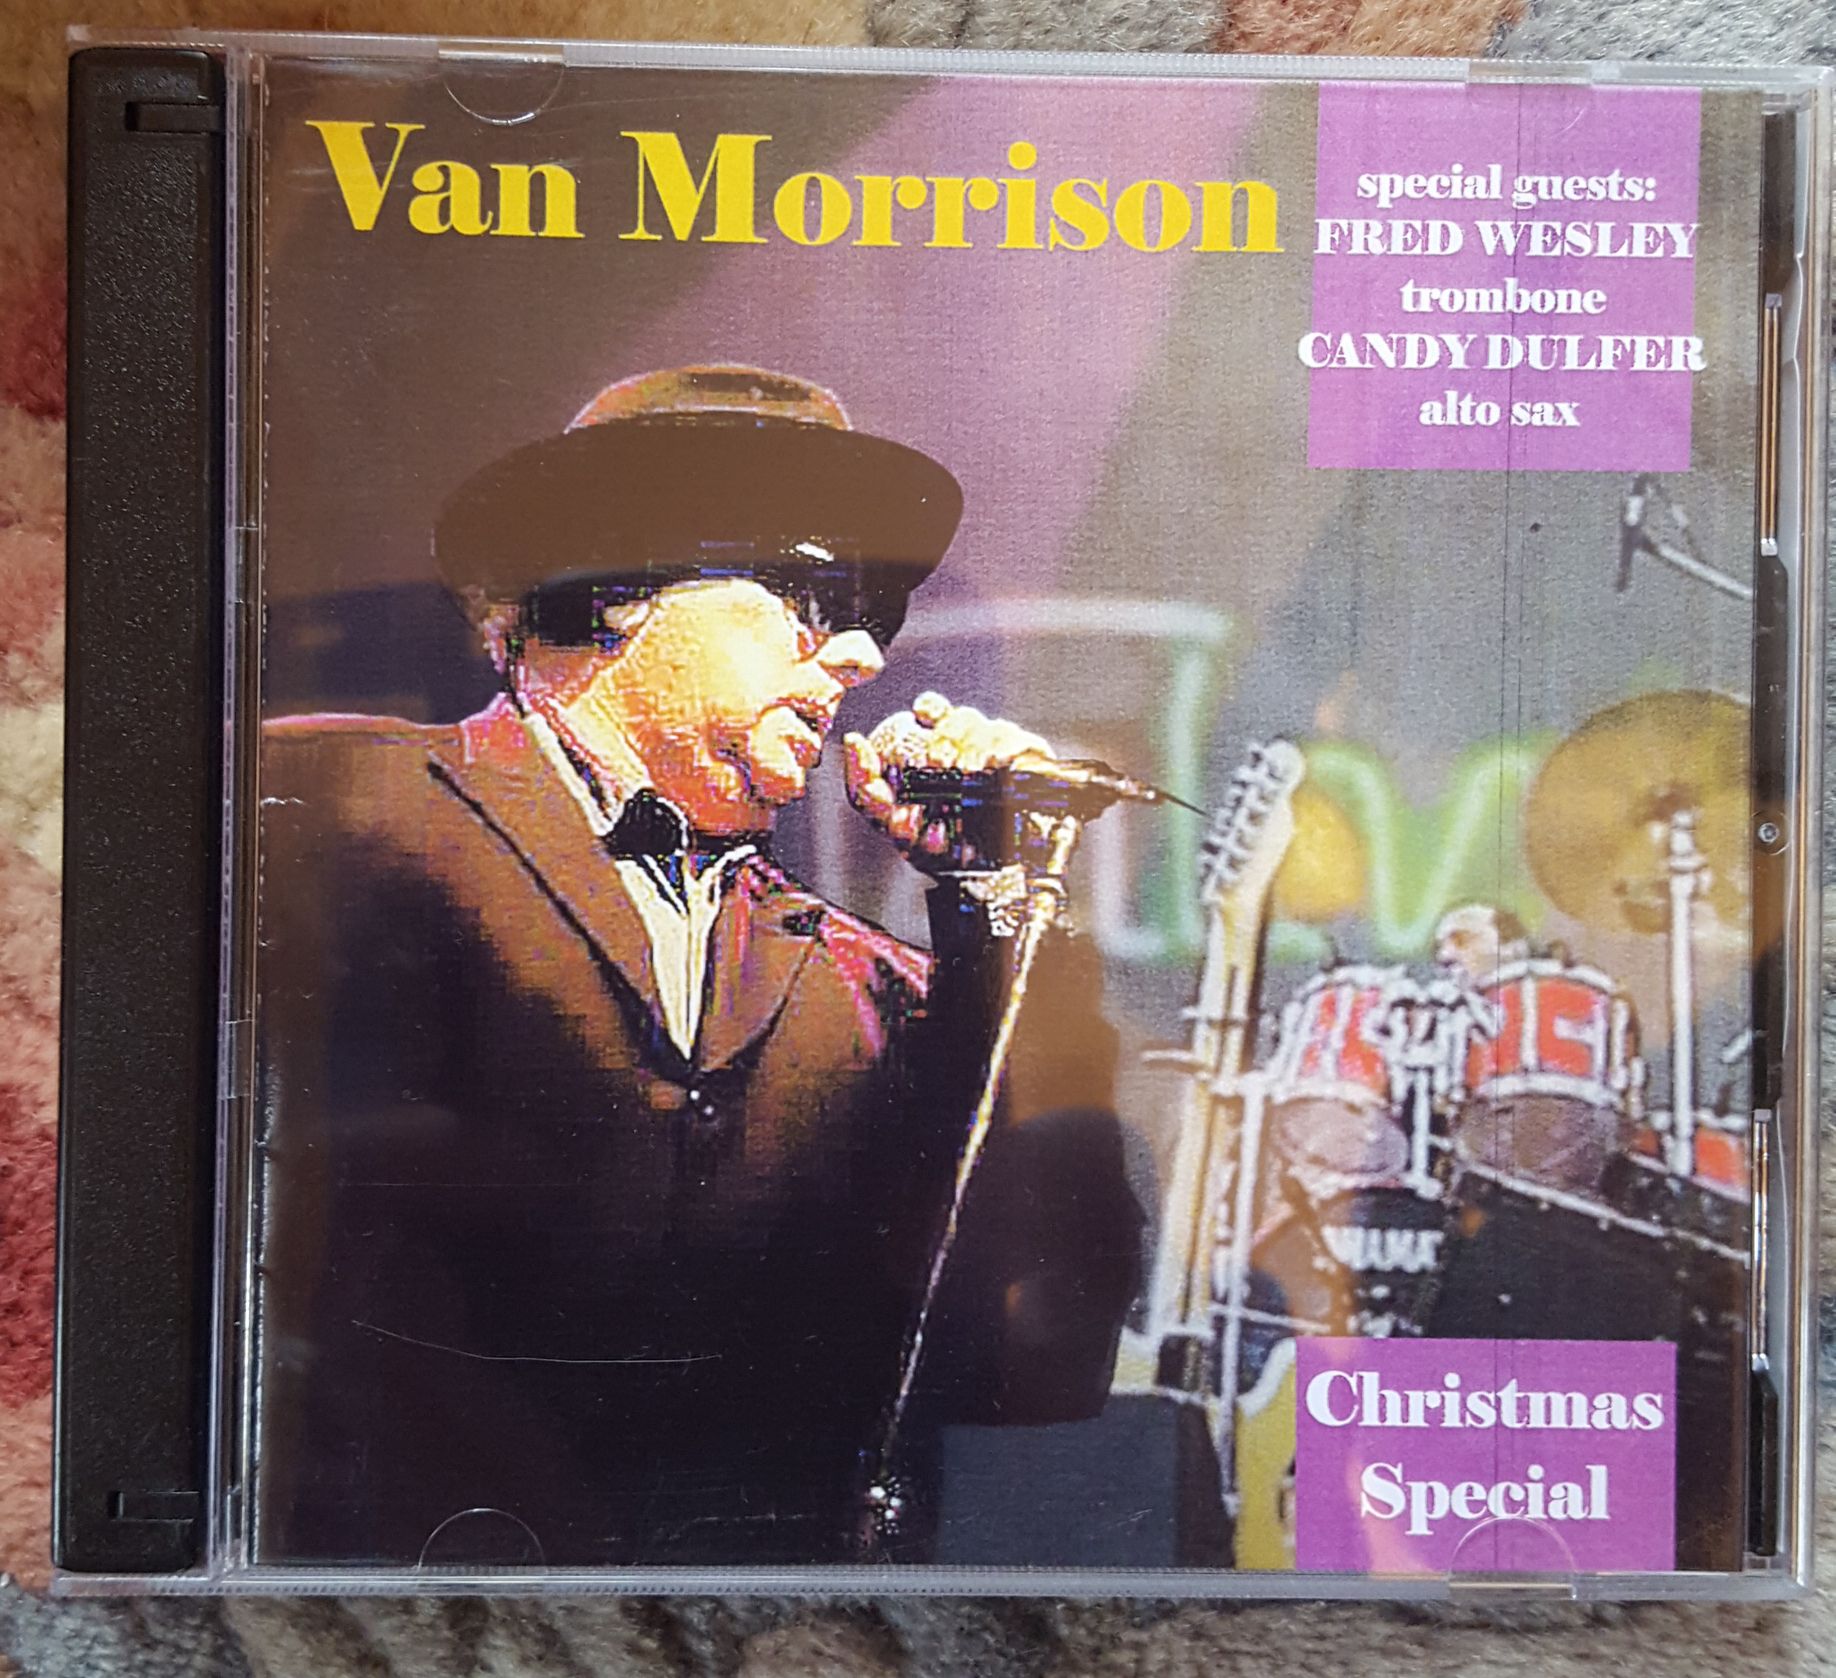 Van Morrison Christmas Special 2 CD set new